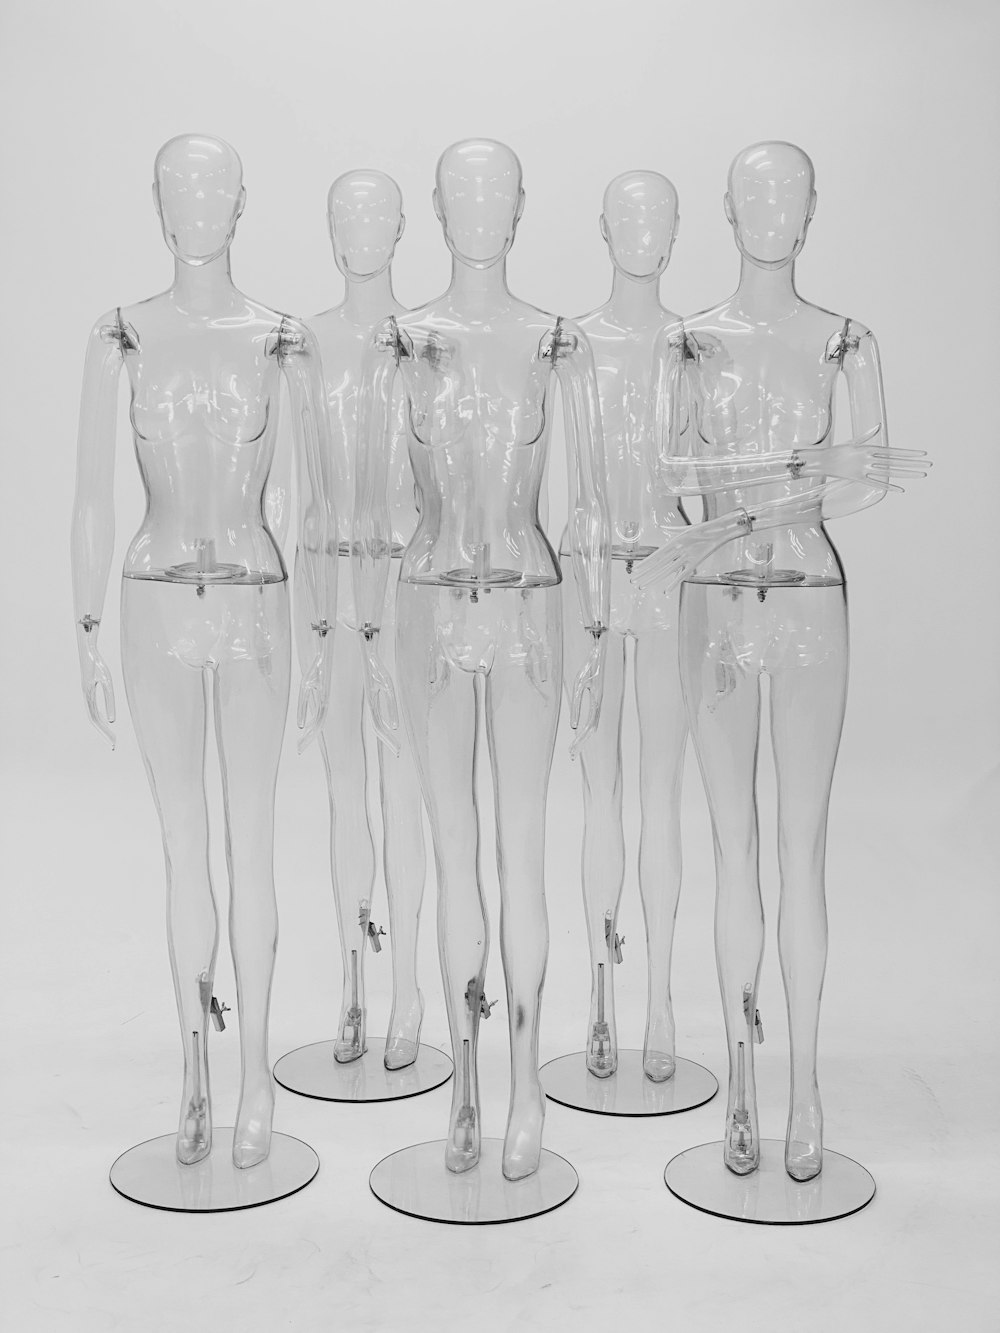 Botellas de vidrio transparente sobre superficie blanca